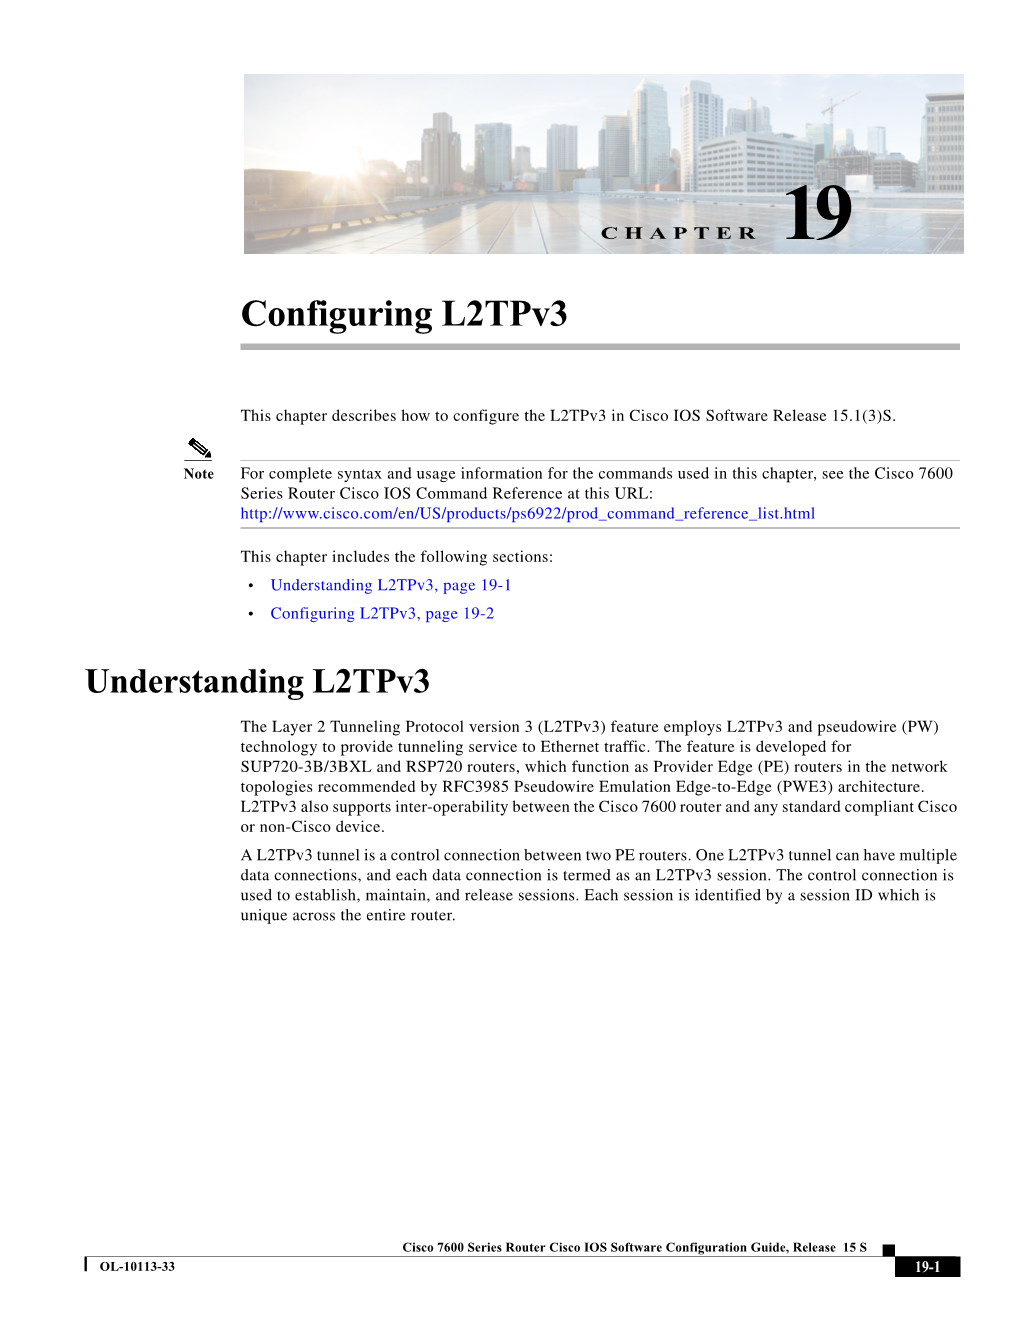 Configuring L2tpv3